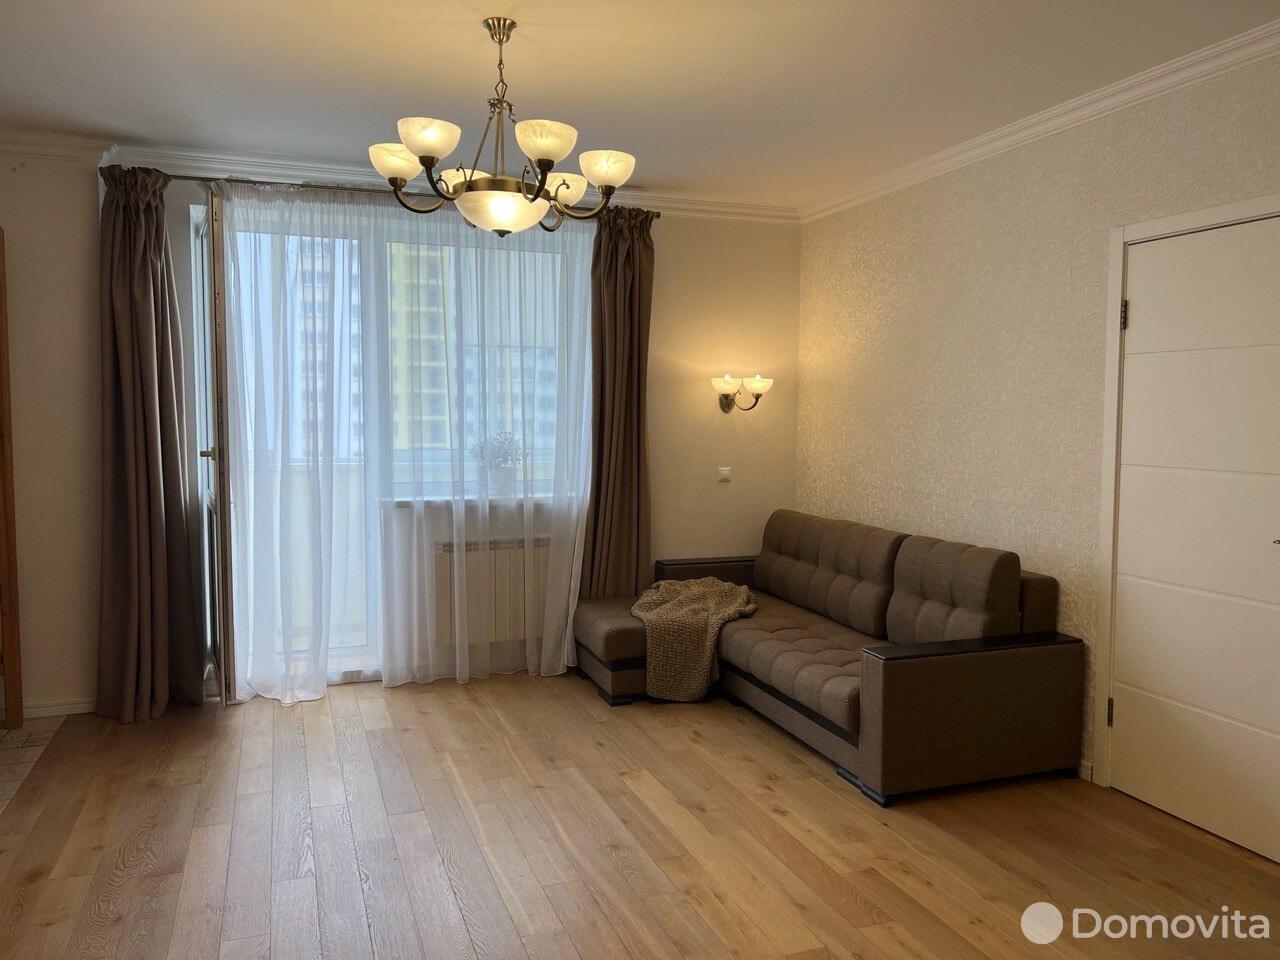 квартира, Минск, ул. Олешева, д. 1, стоимость продажи 401 462 р.